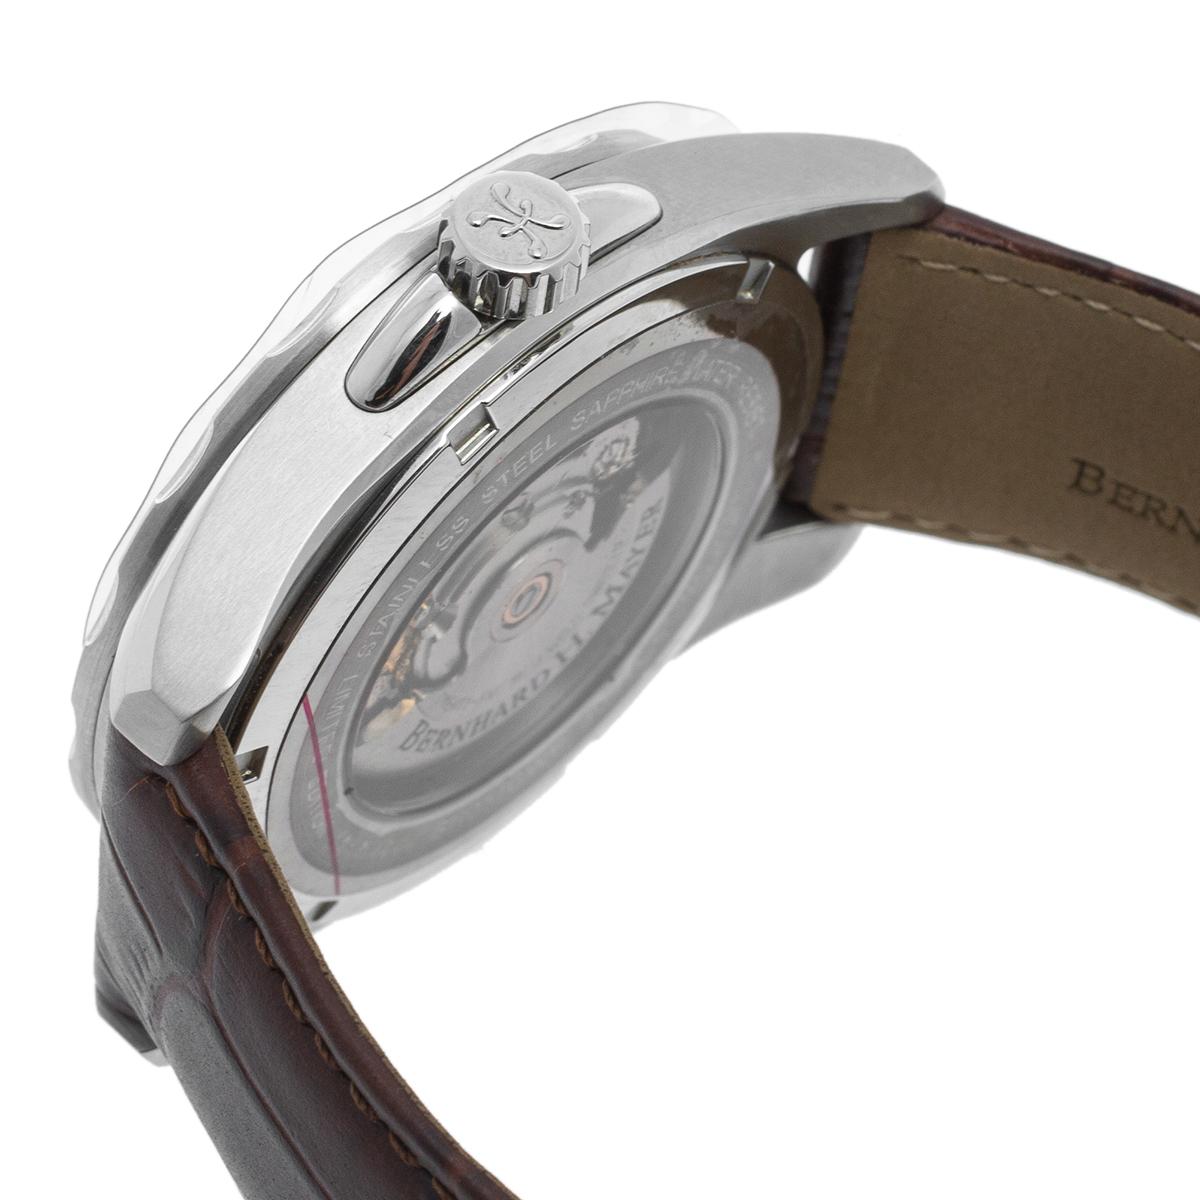 Contemporary Bernhard H. Mayer Stainless Steel Ballad BH05/CWR Men's Wristwatch 44 mm